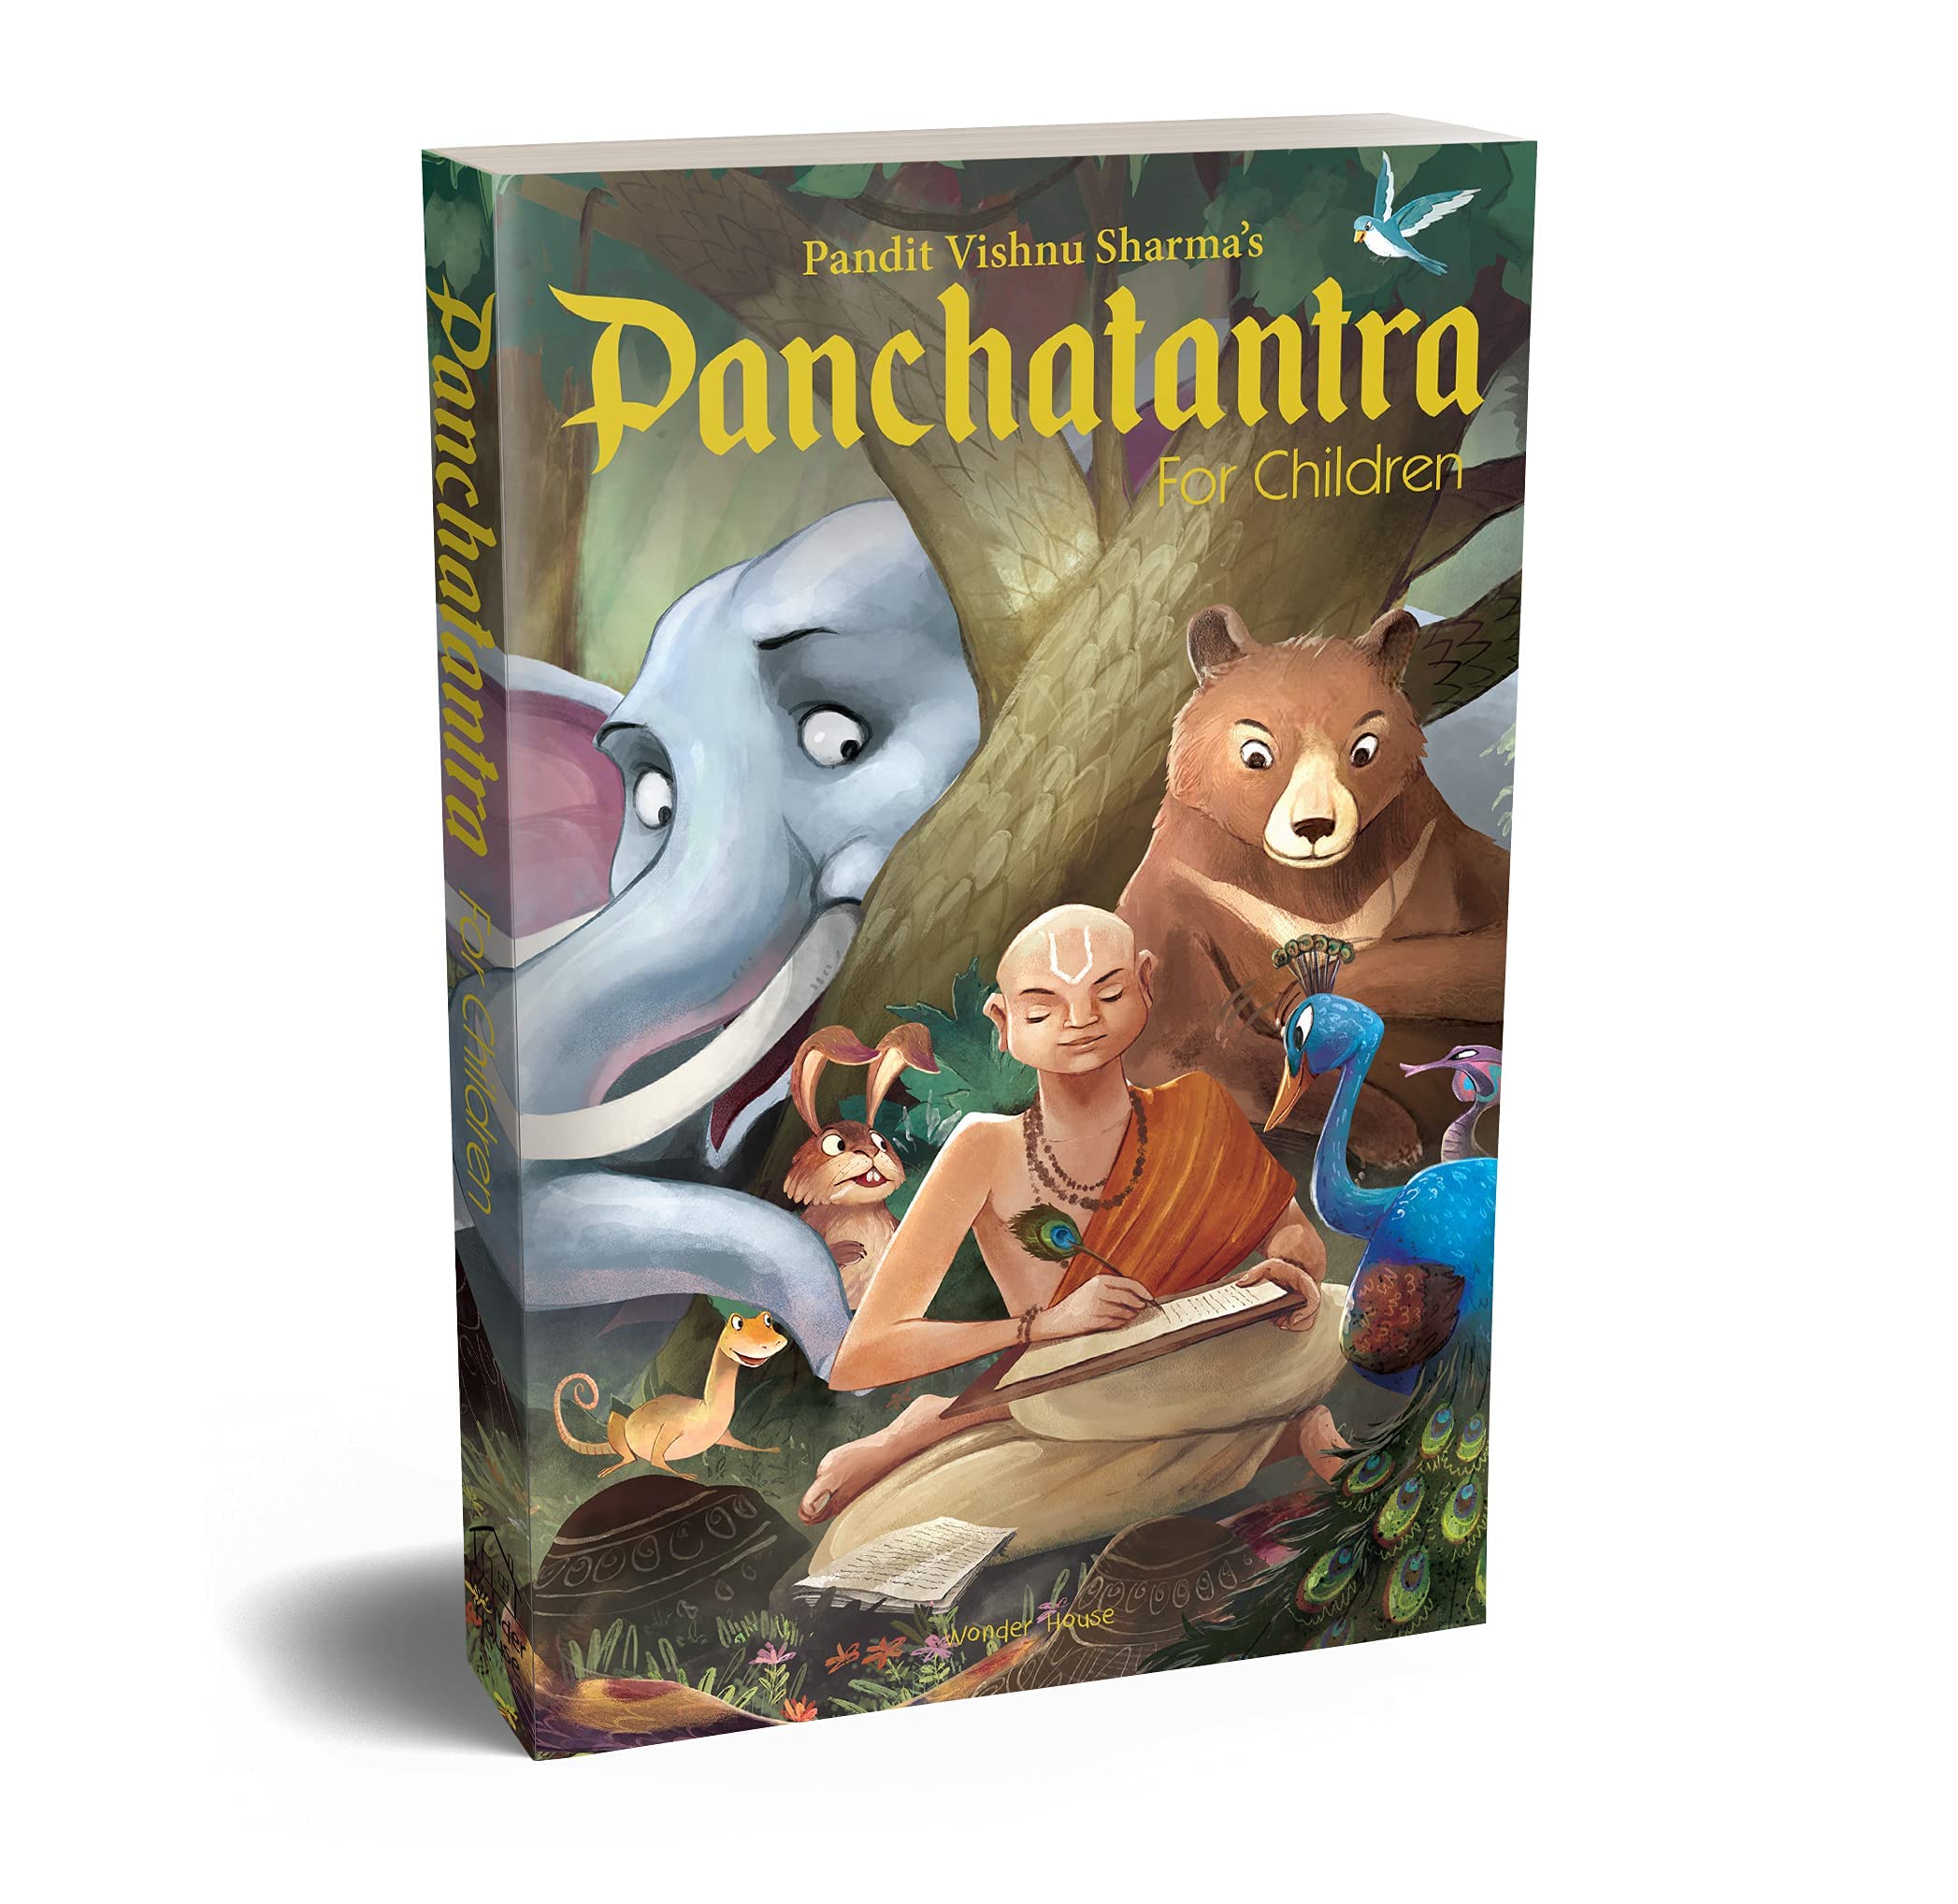 Pandit Vishnu Sharma's Panchatantra For Children: Illustrated stories (Black and White, Paperback) Paperback